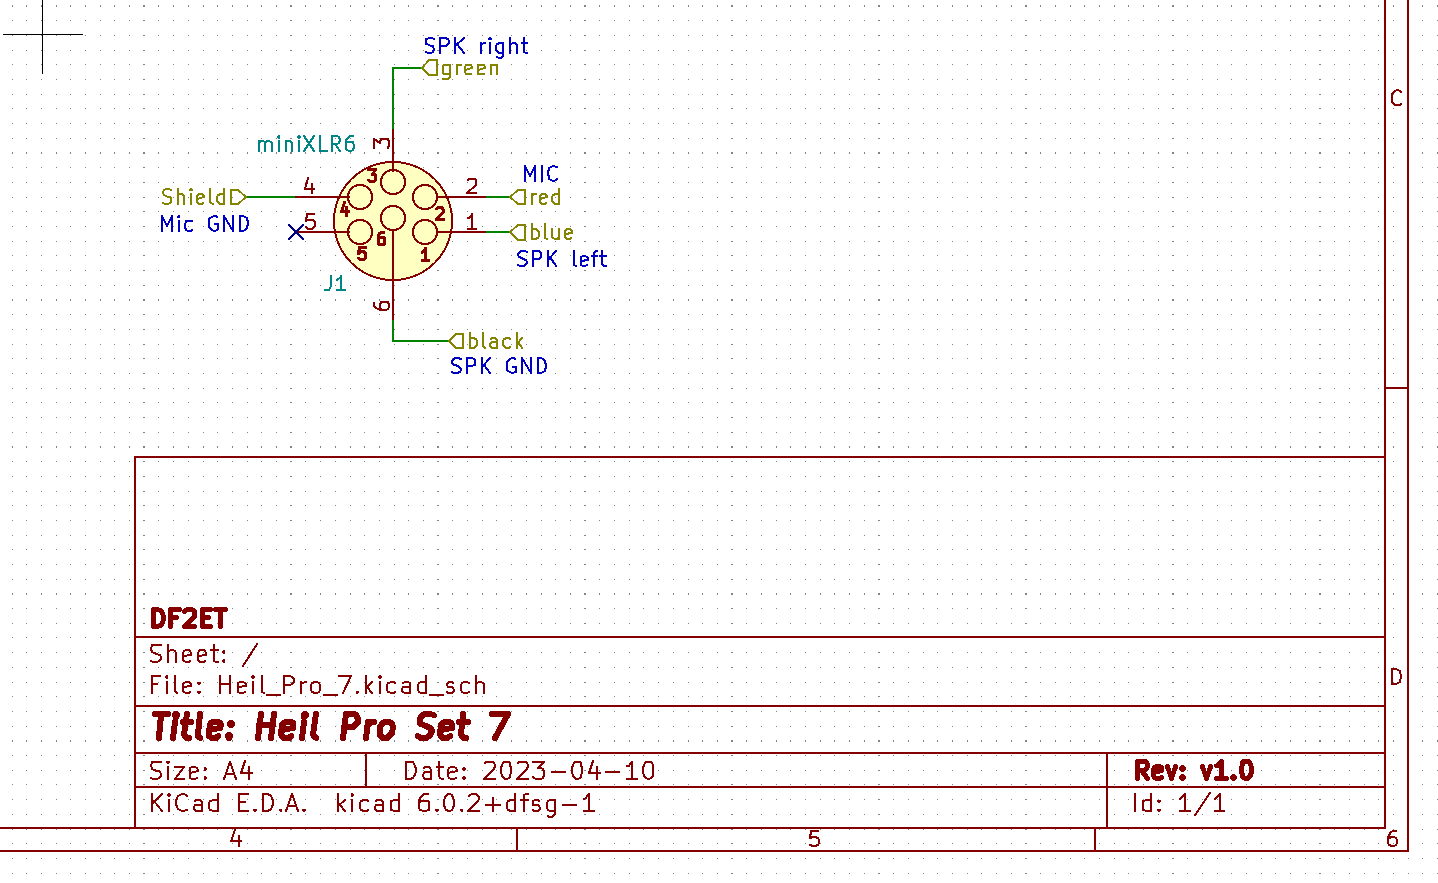 Pinout of miniXLR Connector on Heil Pro Set 7